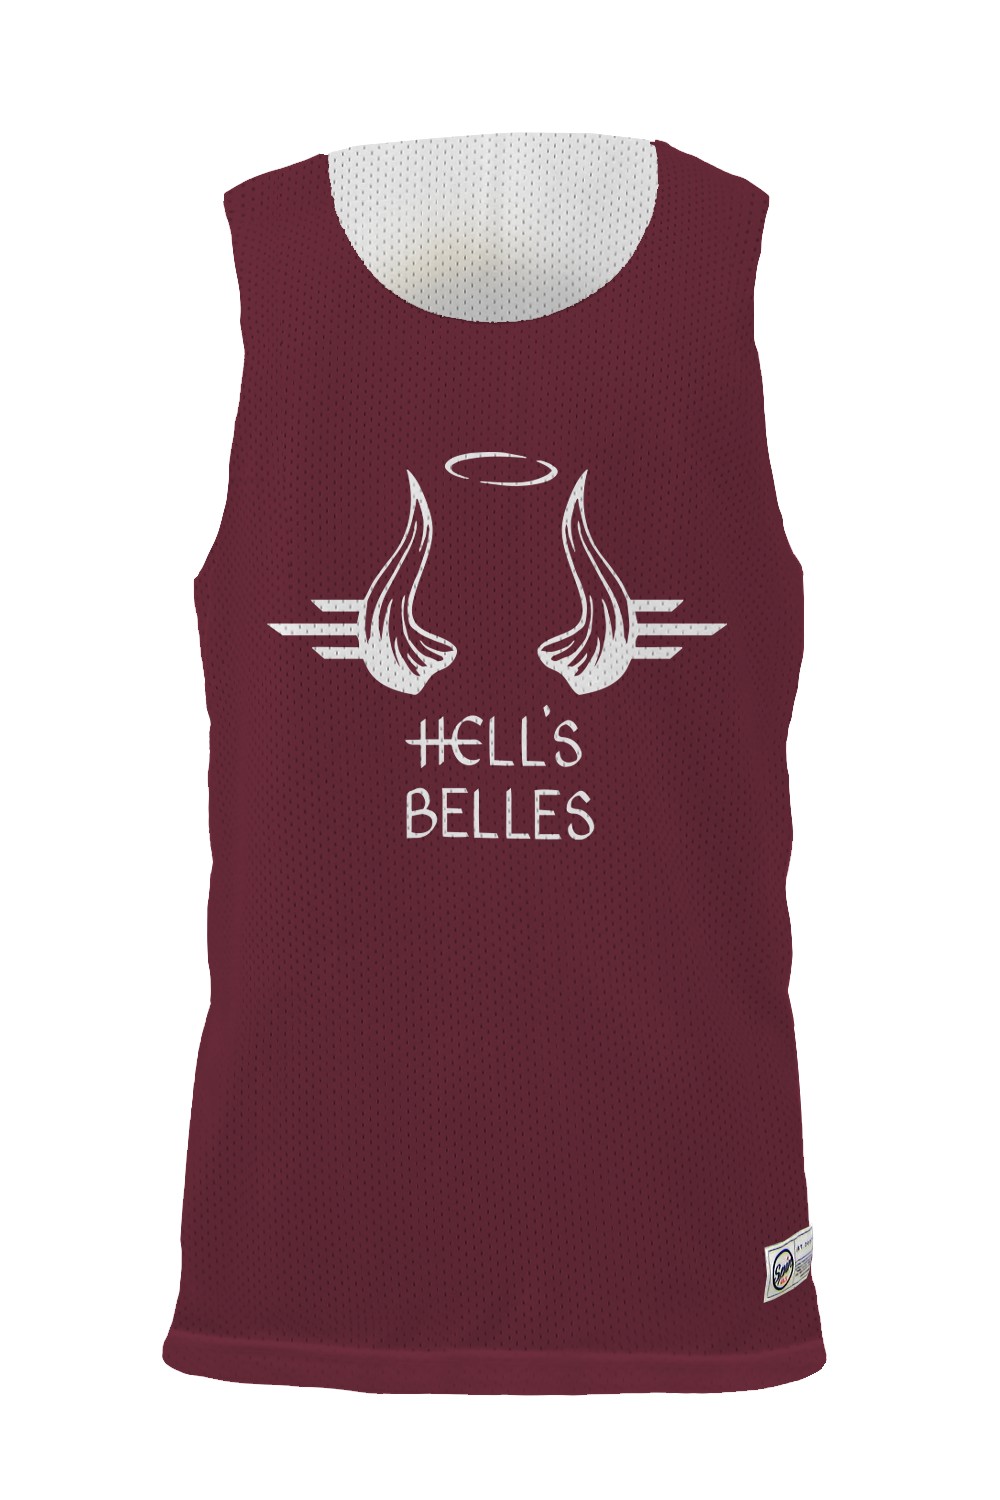 Hell's Belles Reversible Tank (Maroon/White)